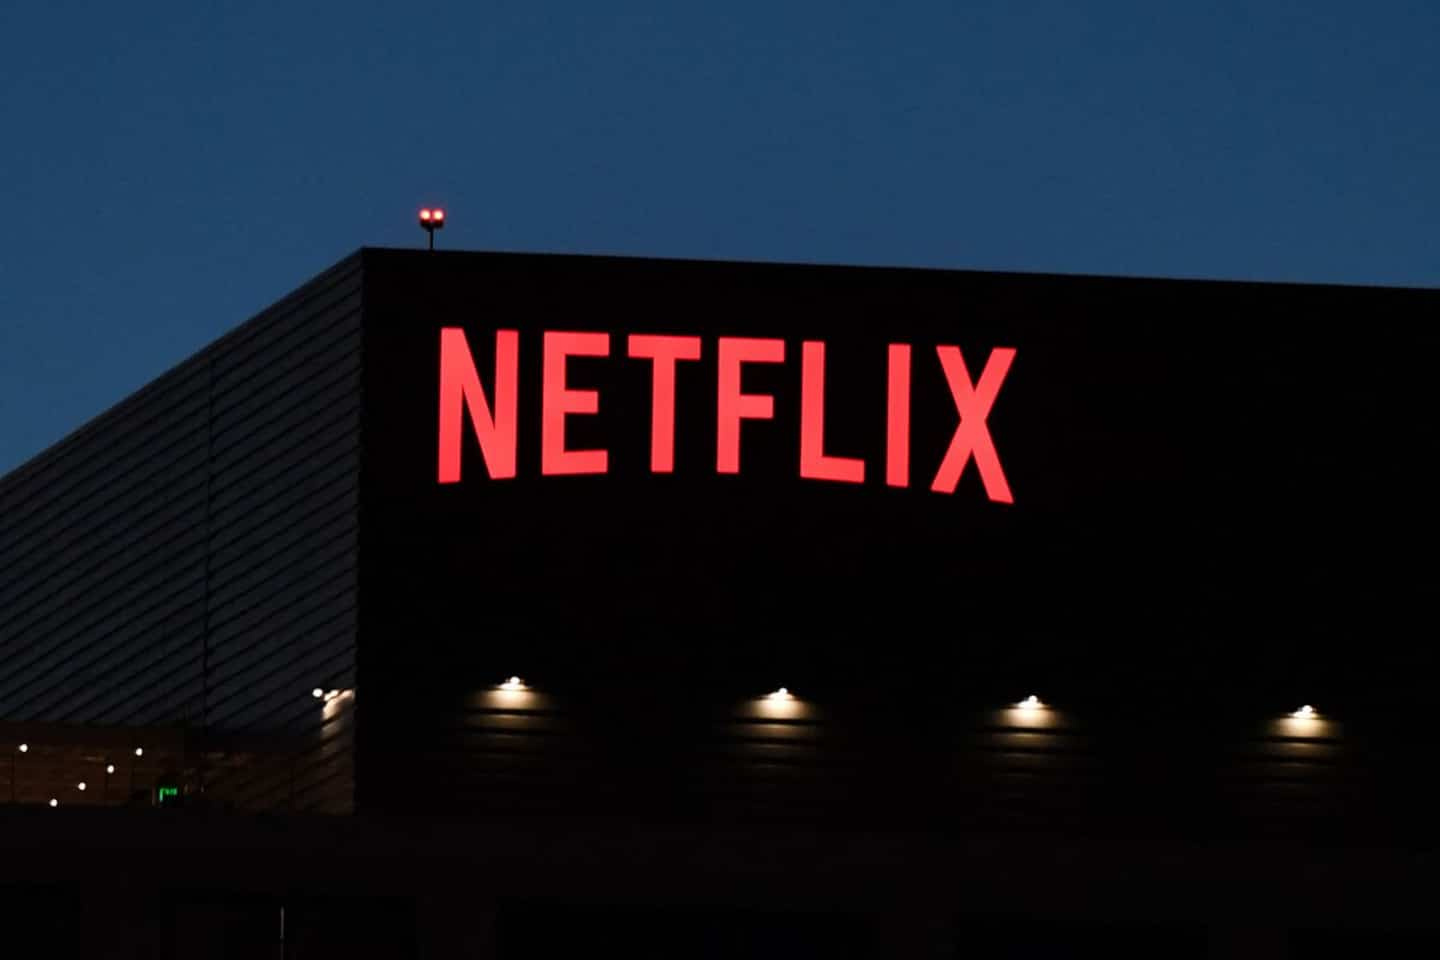 Netflix chooses Microsoft to manage advertising on its platform